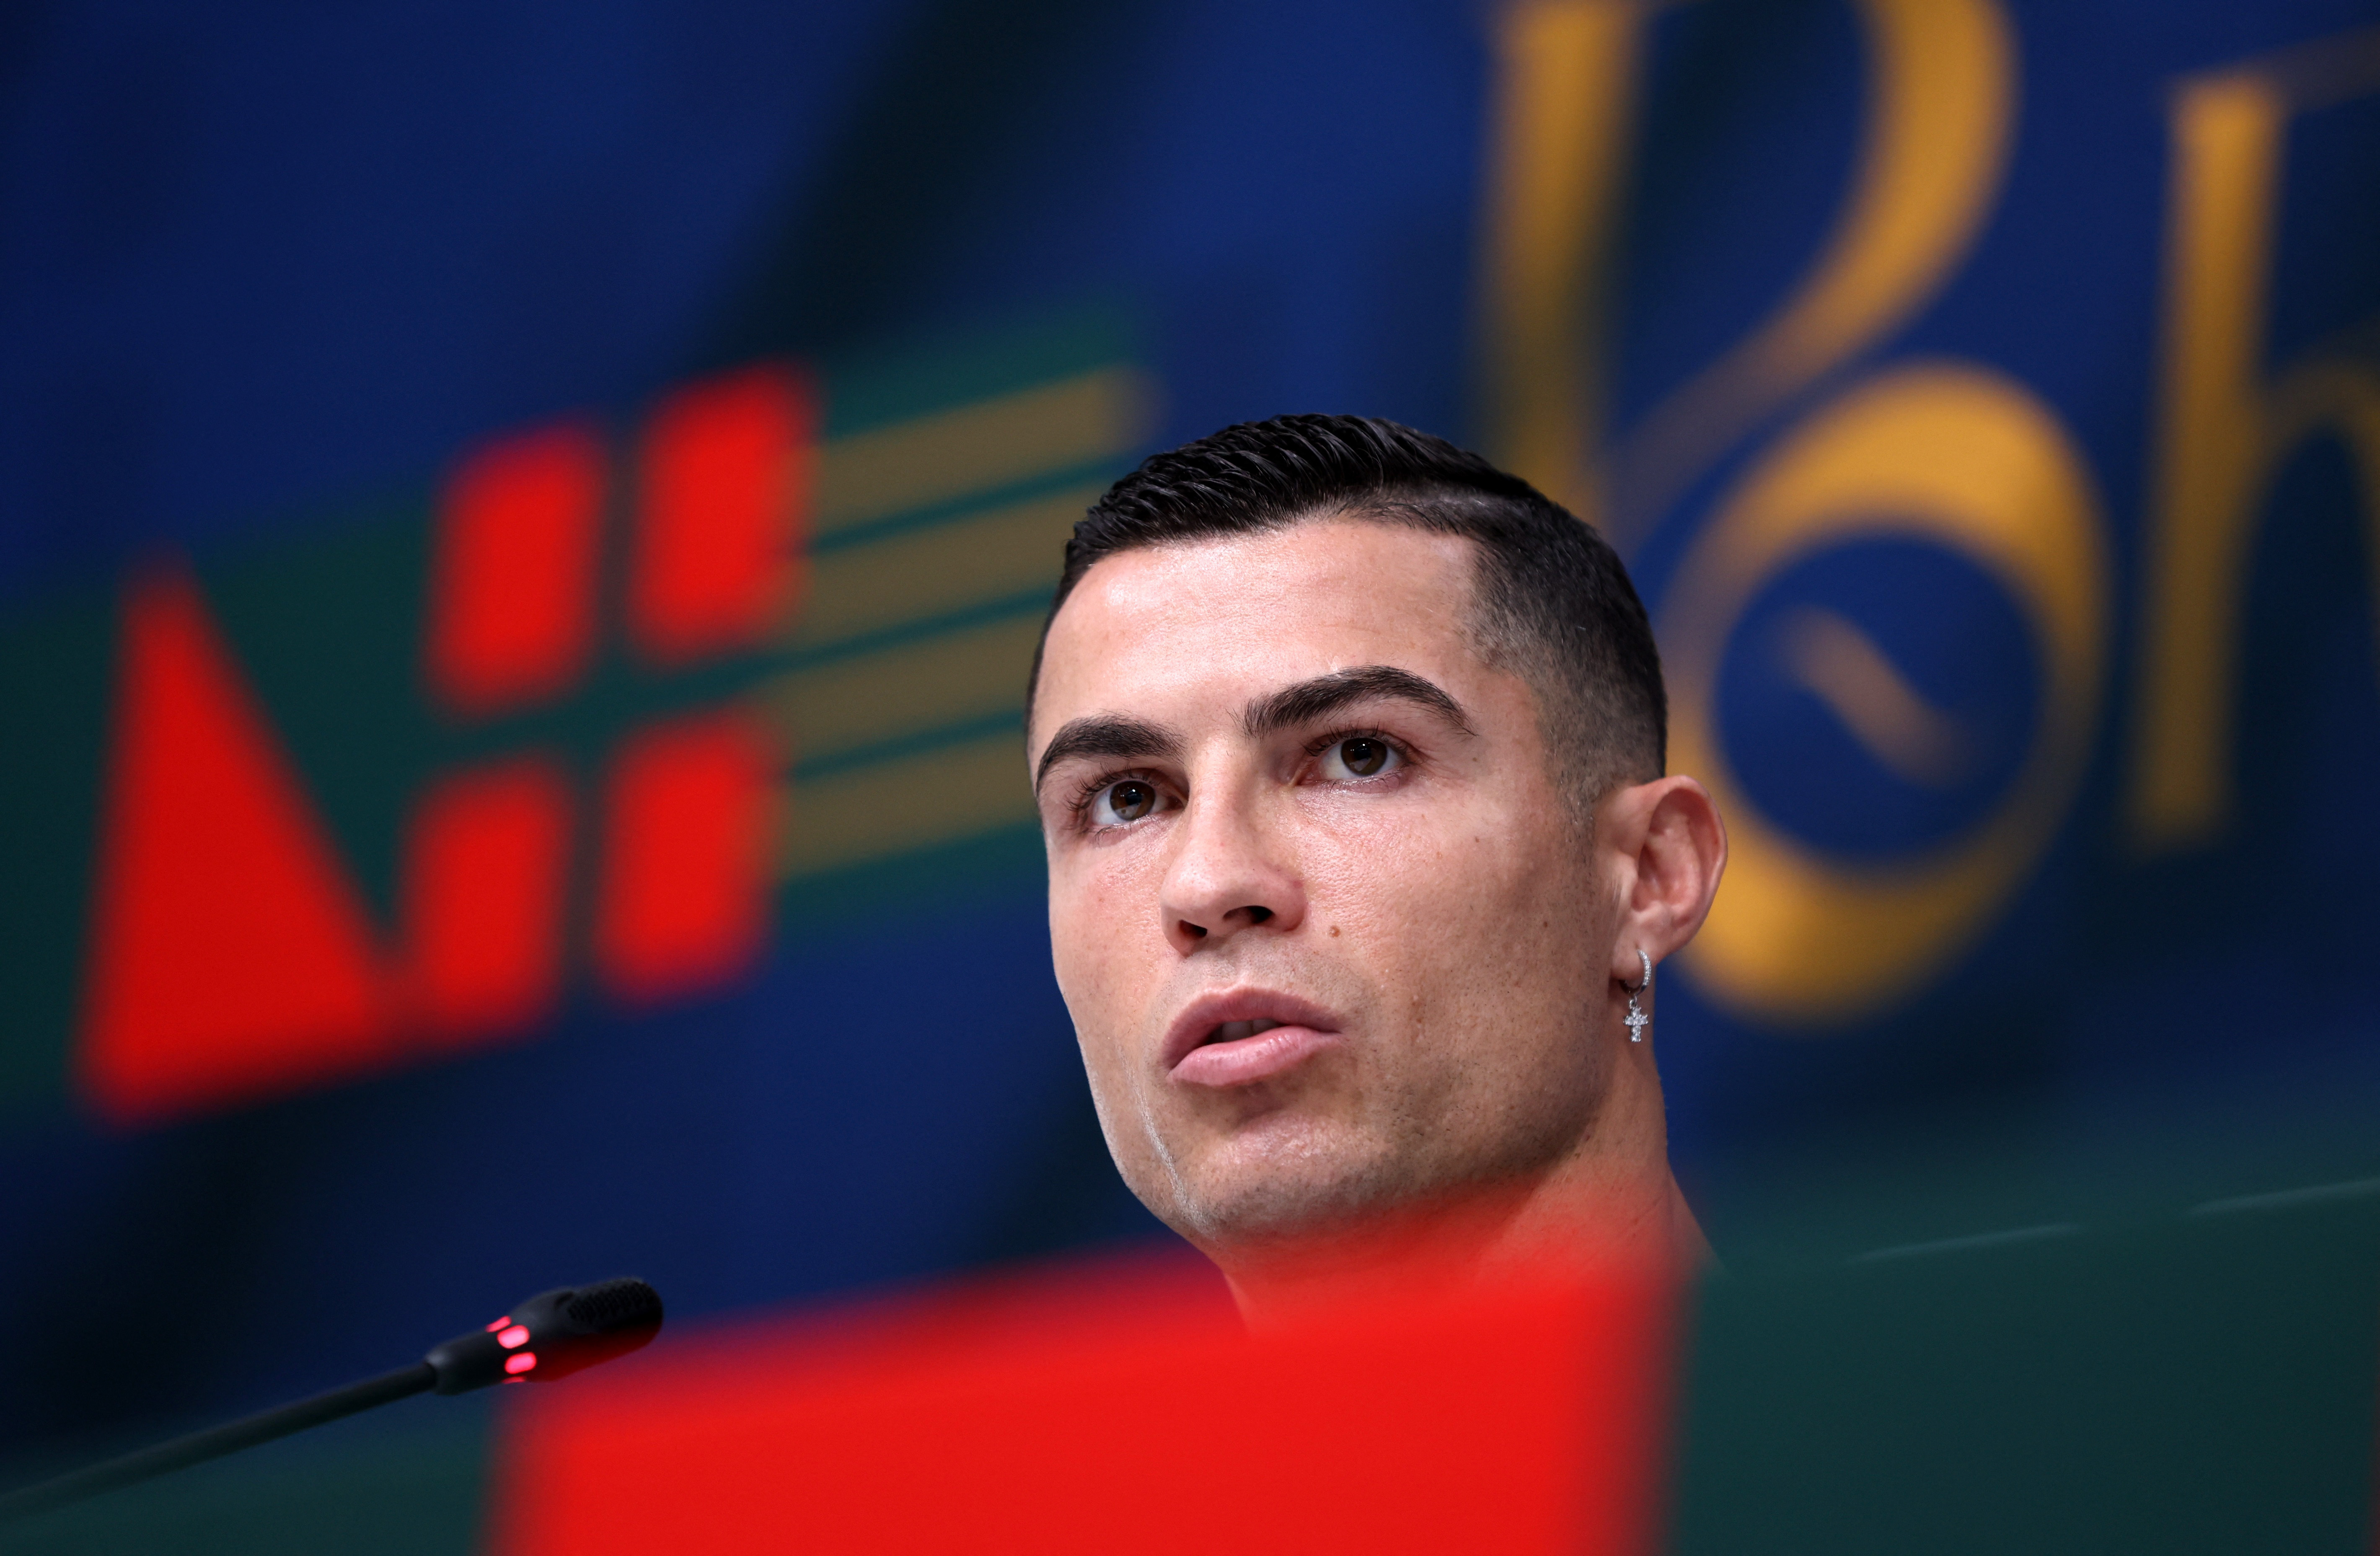 Ronaldo's exit from Man Utd best for both parties - Ferdinand | Reuters